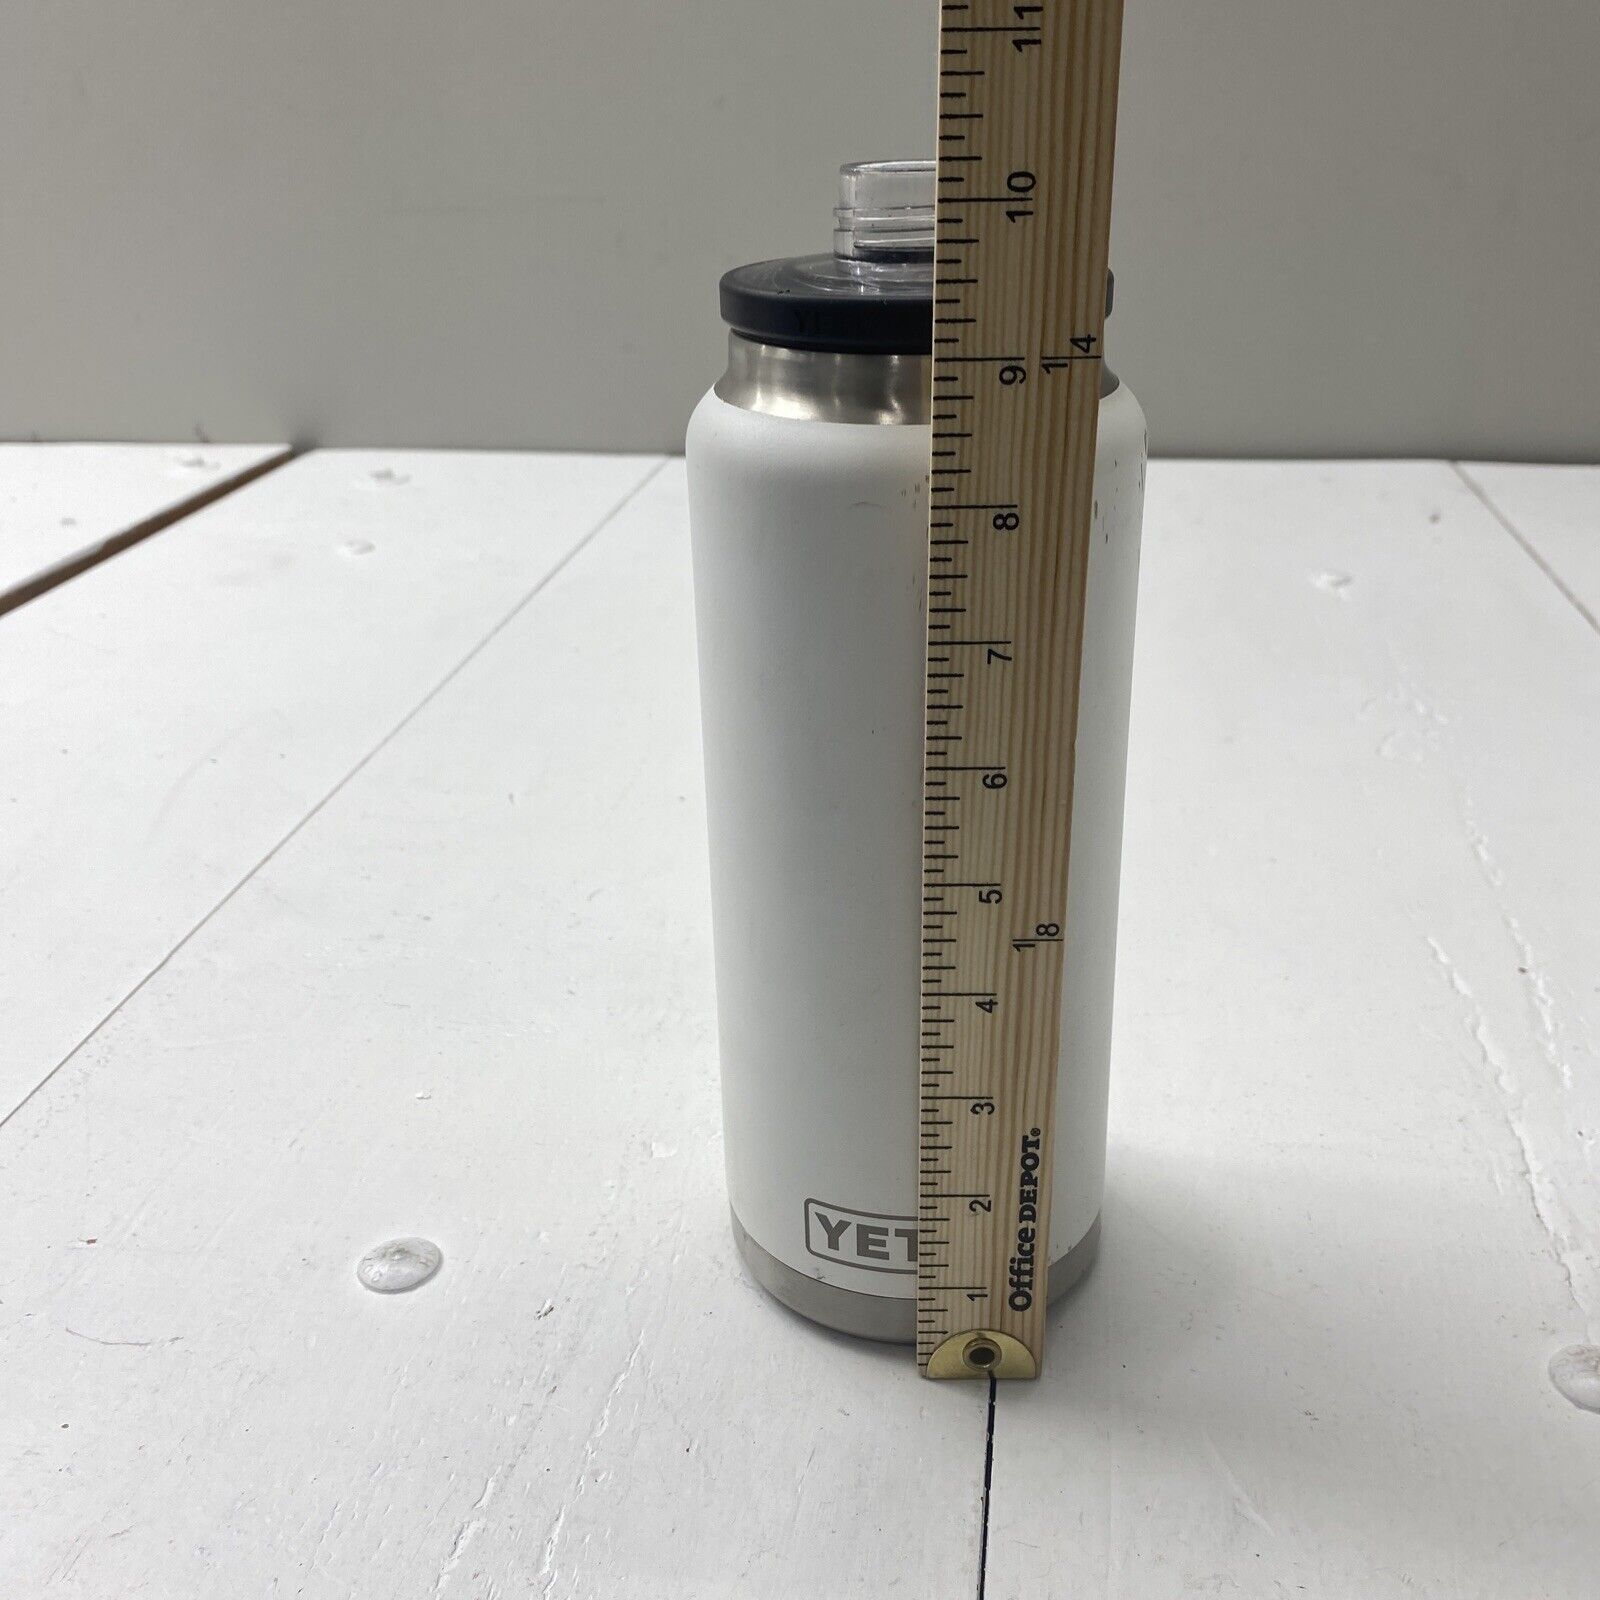 YETI Rambler 36 oz Bottle with Chug Cap Cooler - White